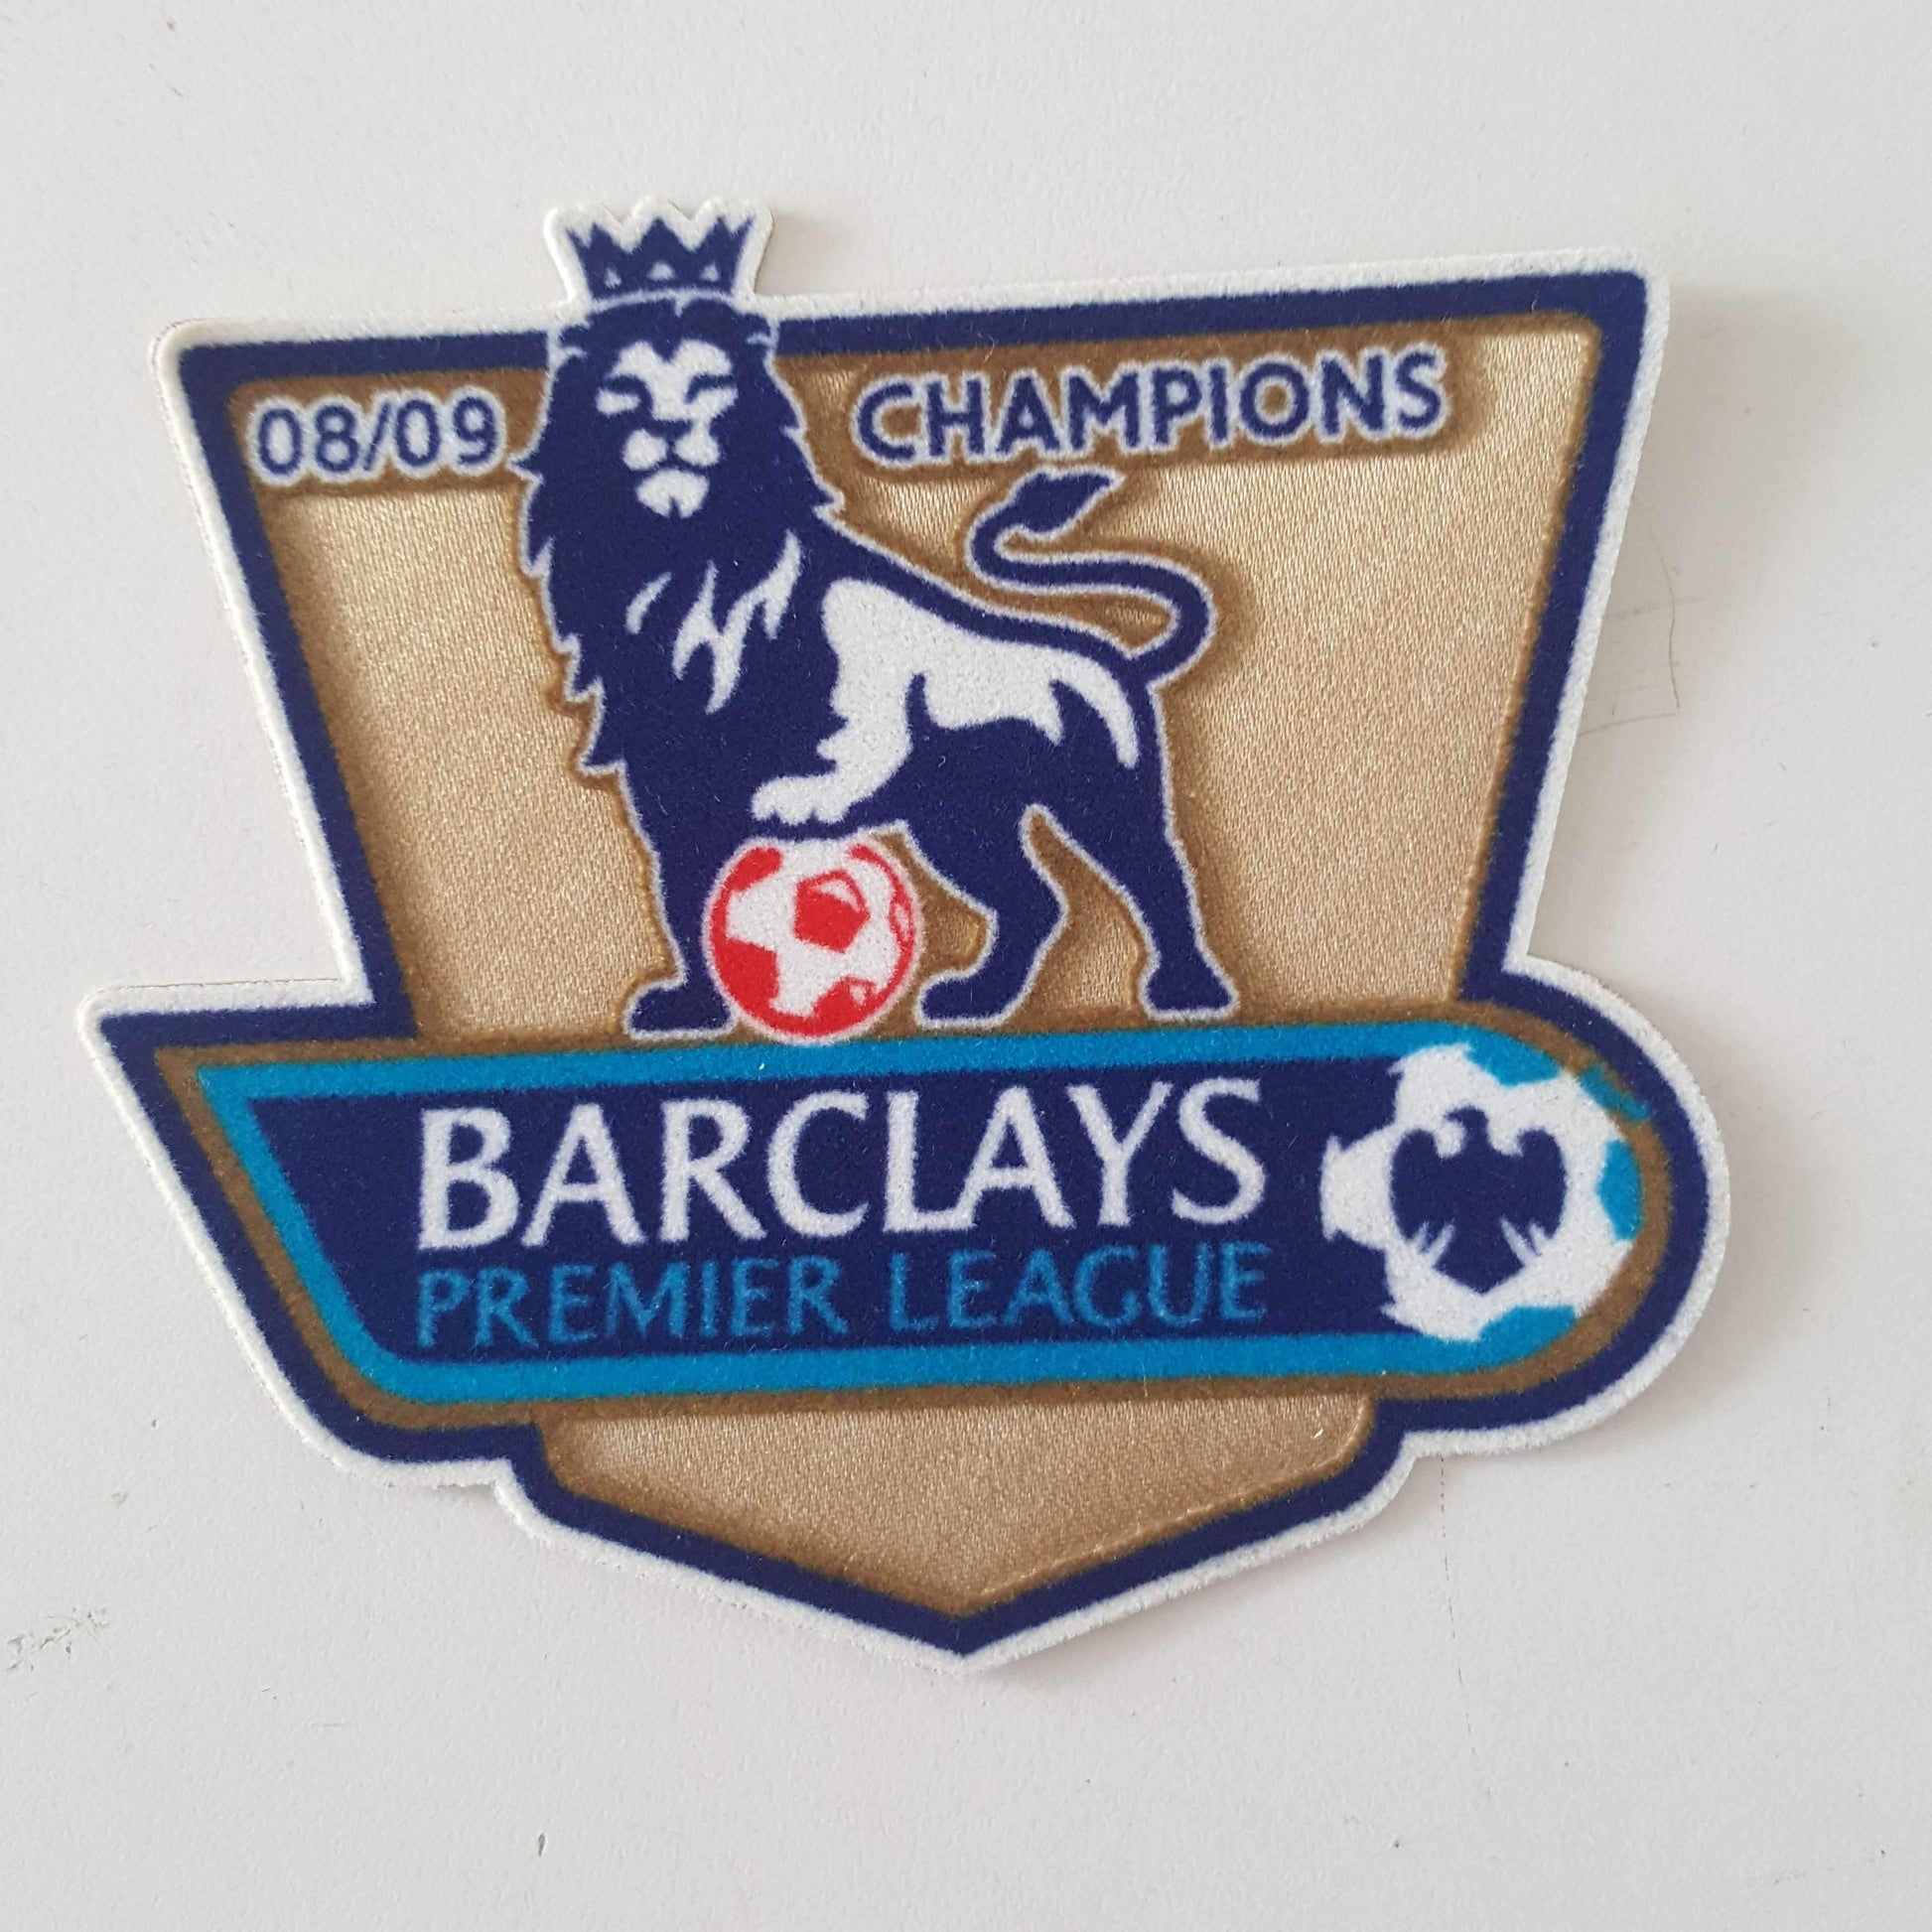 2008/09 Barclays Premier League Champions Patch - ClassicFootballJersey